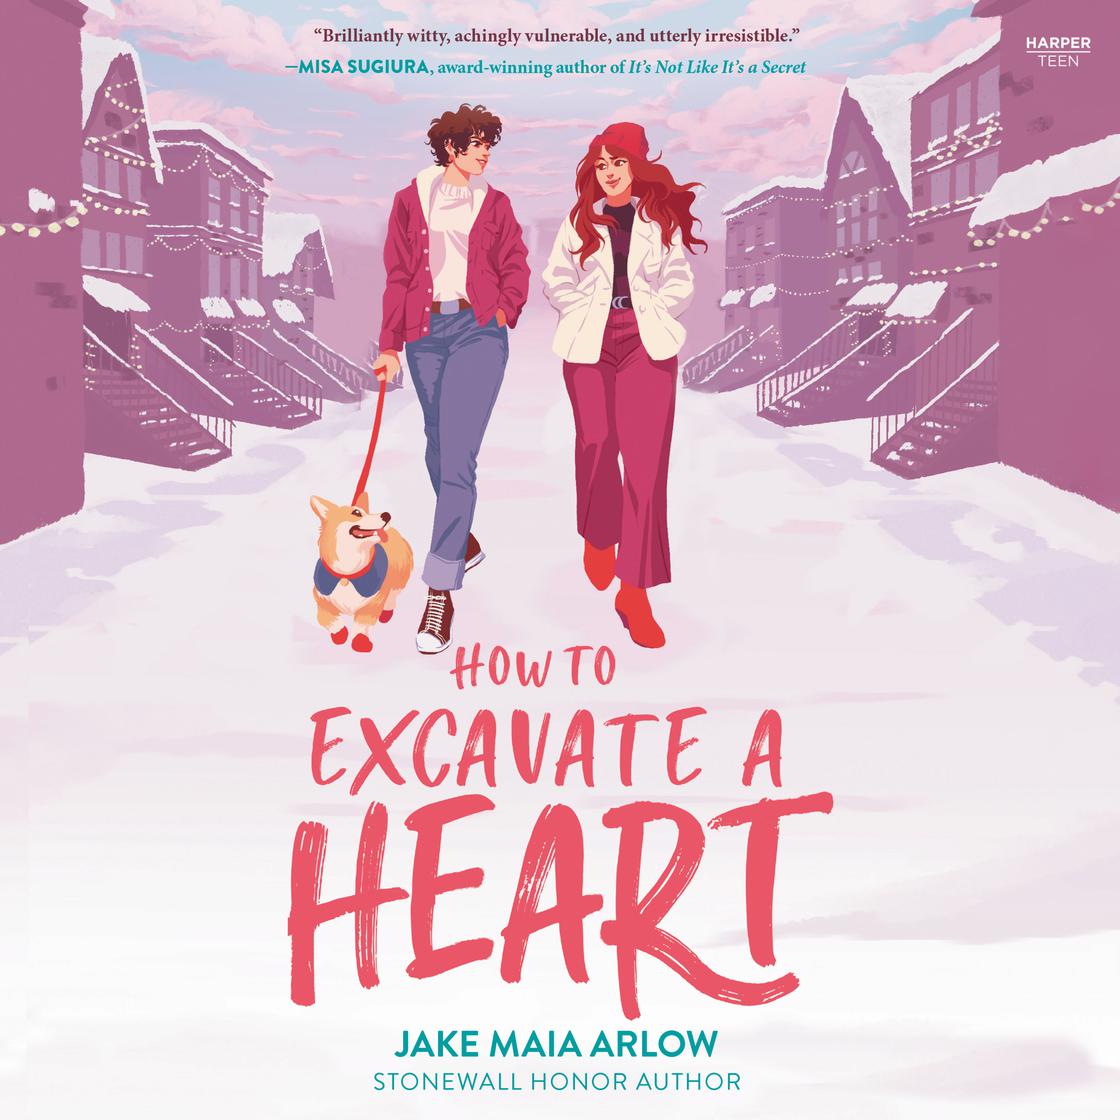 Jake Maia Arlow: How to Excavate a Heart (AudiobookFormat, 2022, HarperTeen)